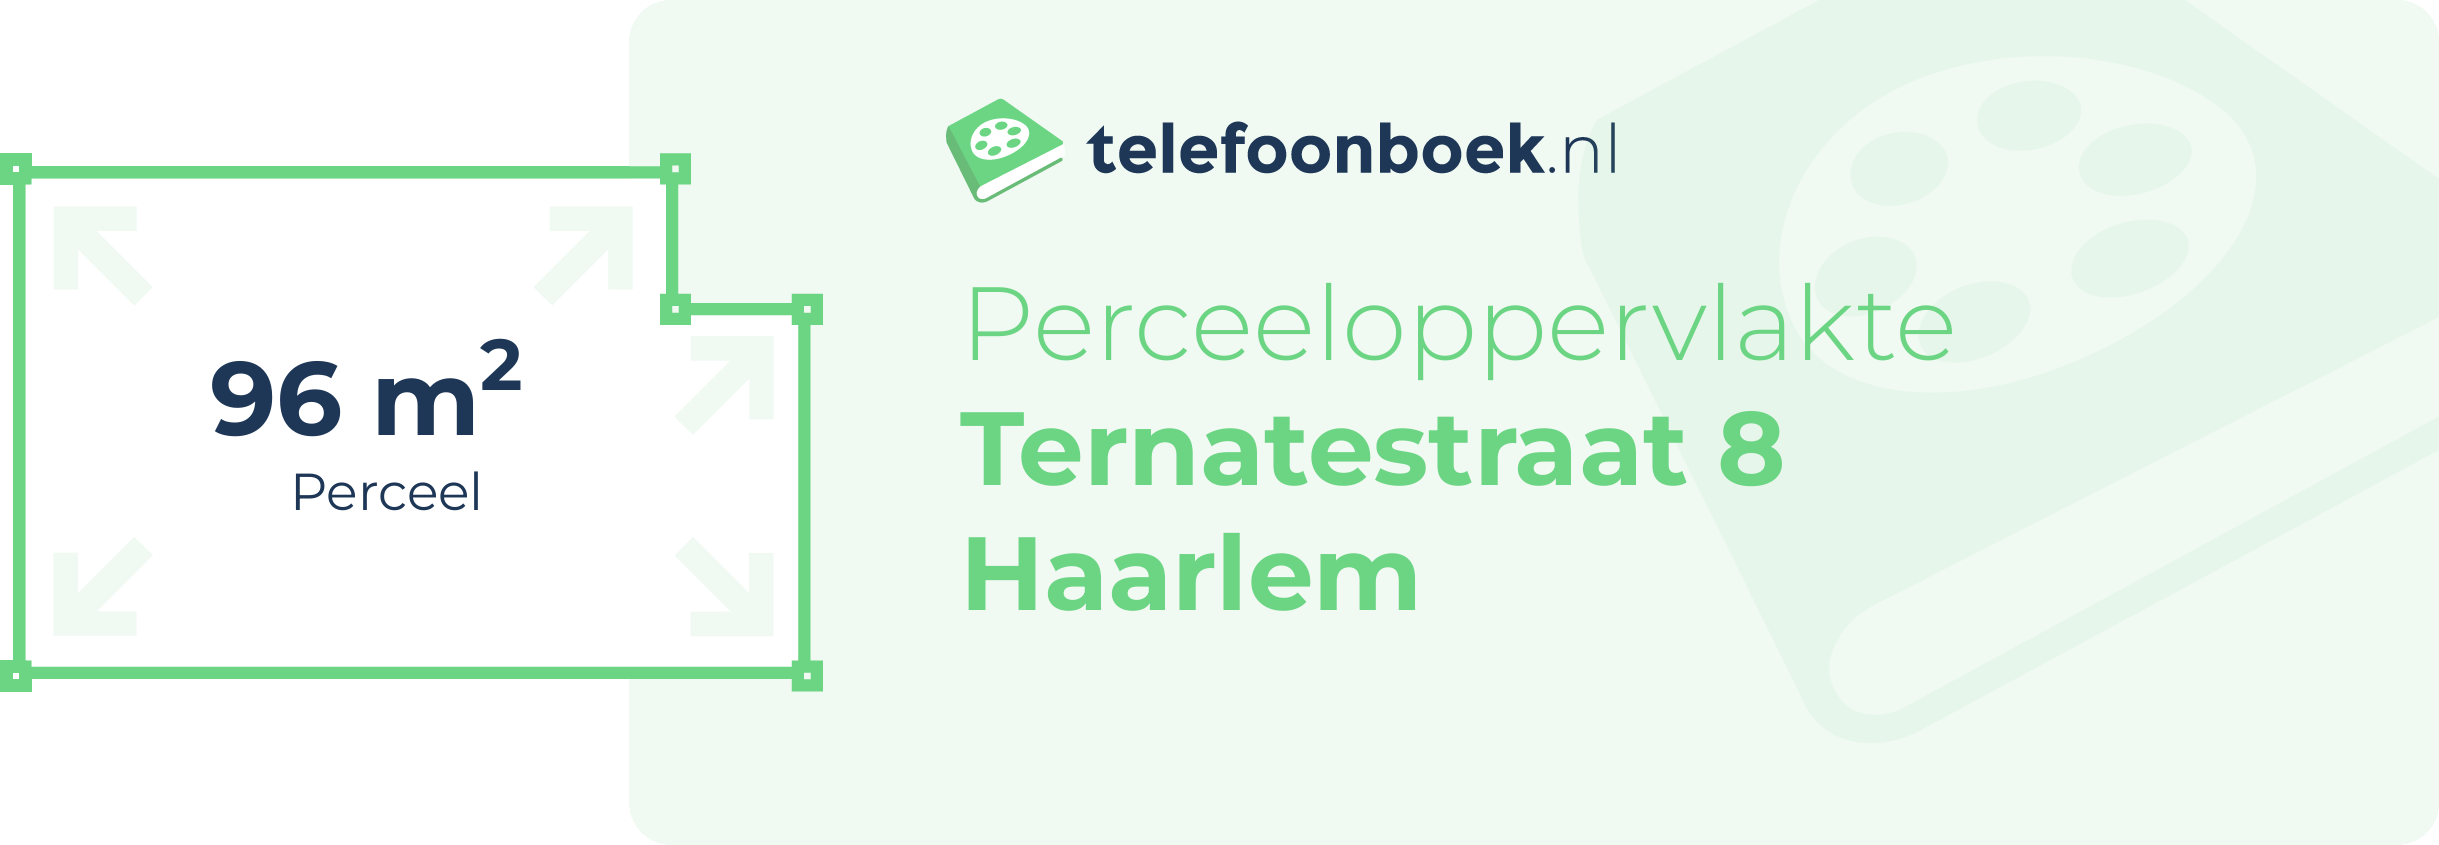 Perceeloppervlakte Ternatestraat 8 Haarlem